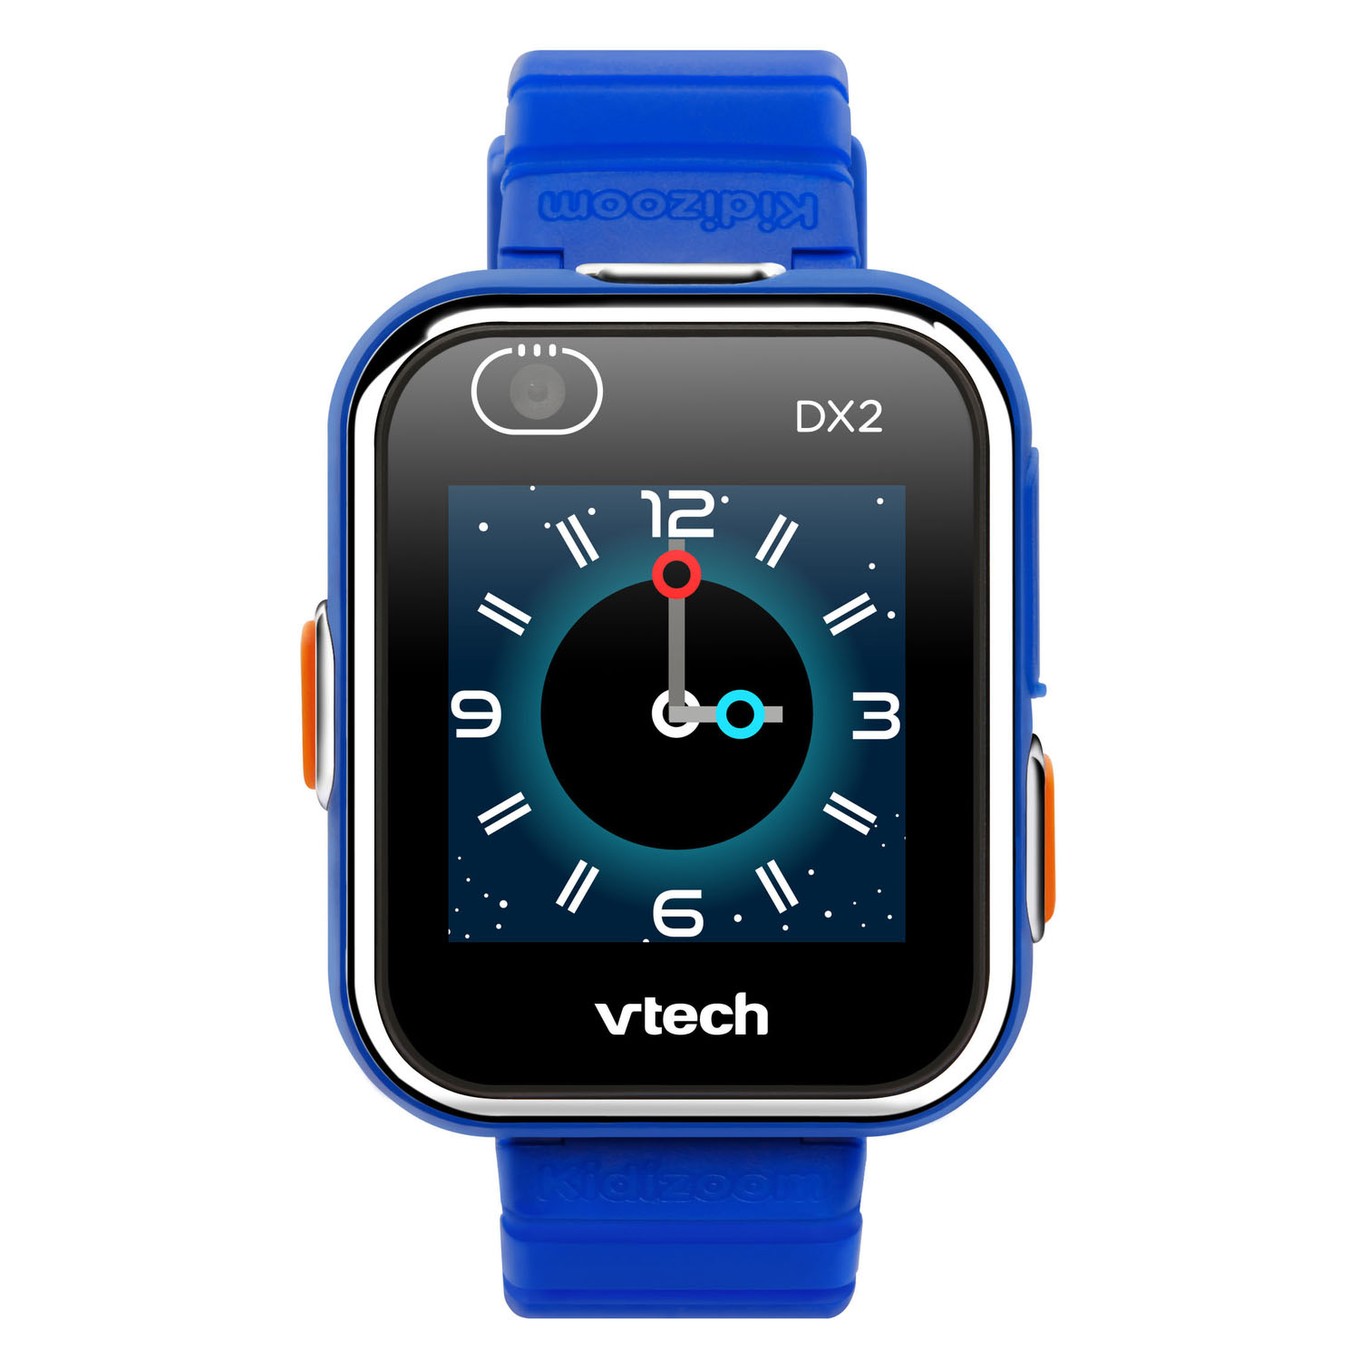 vtech smartwatch age